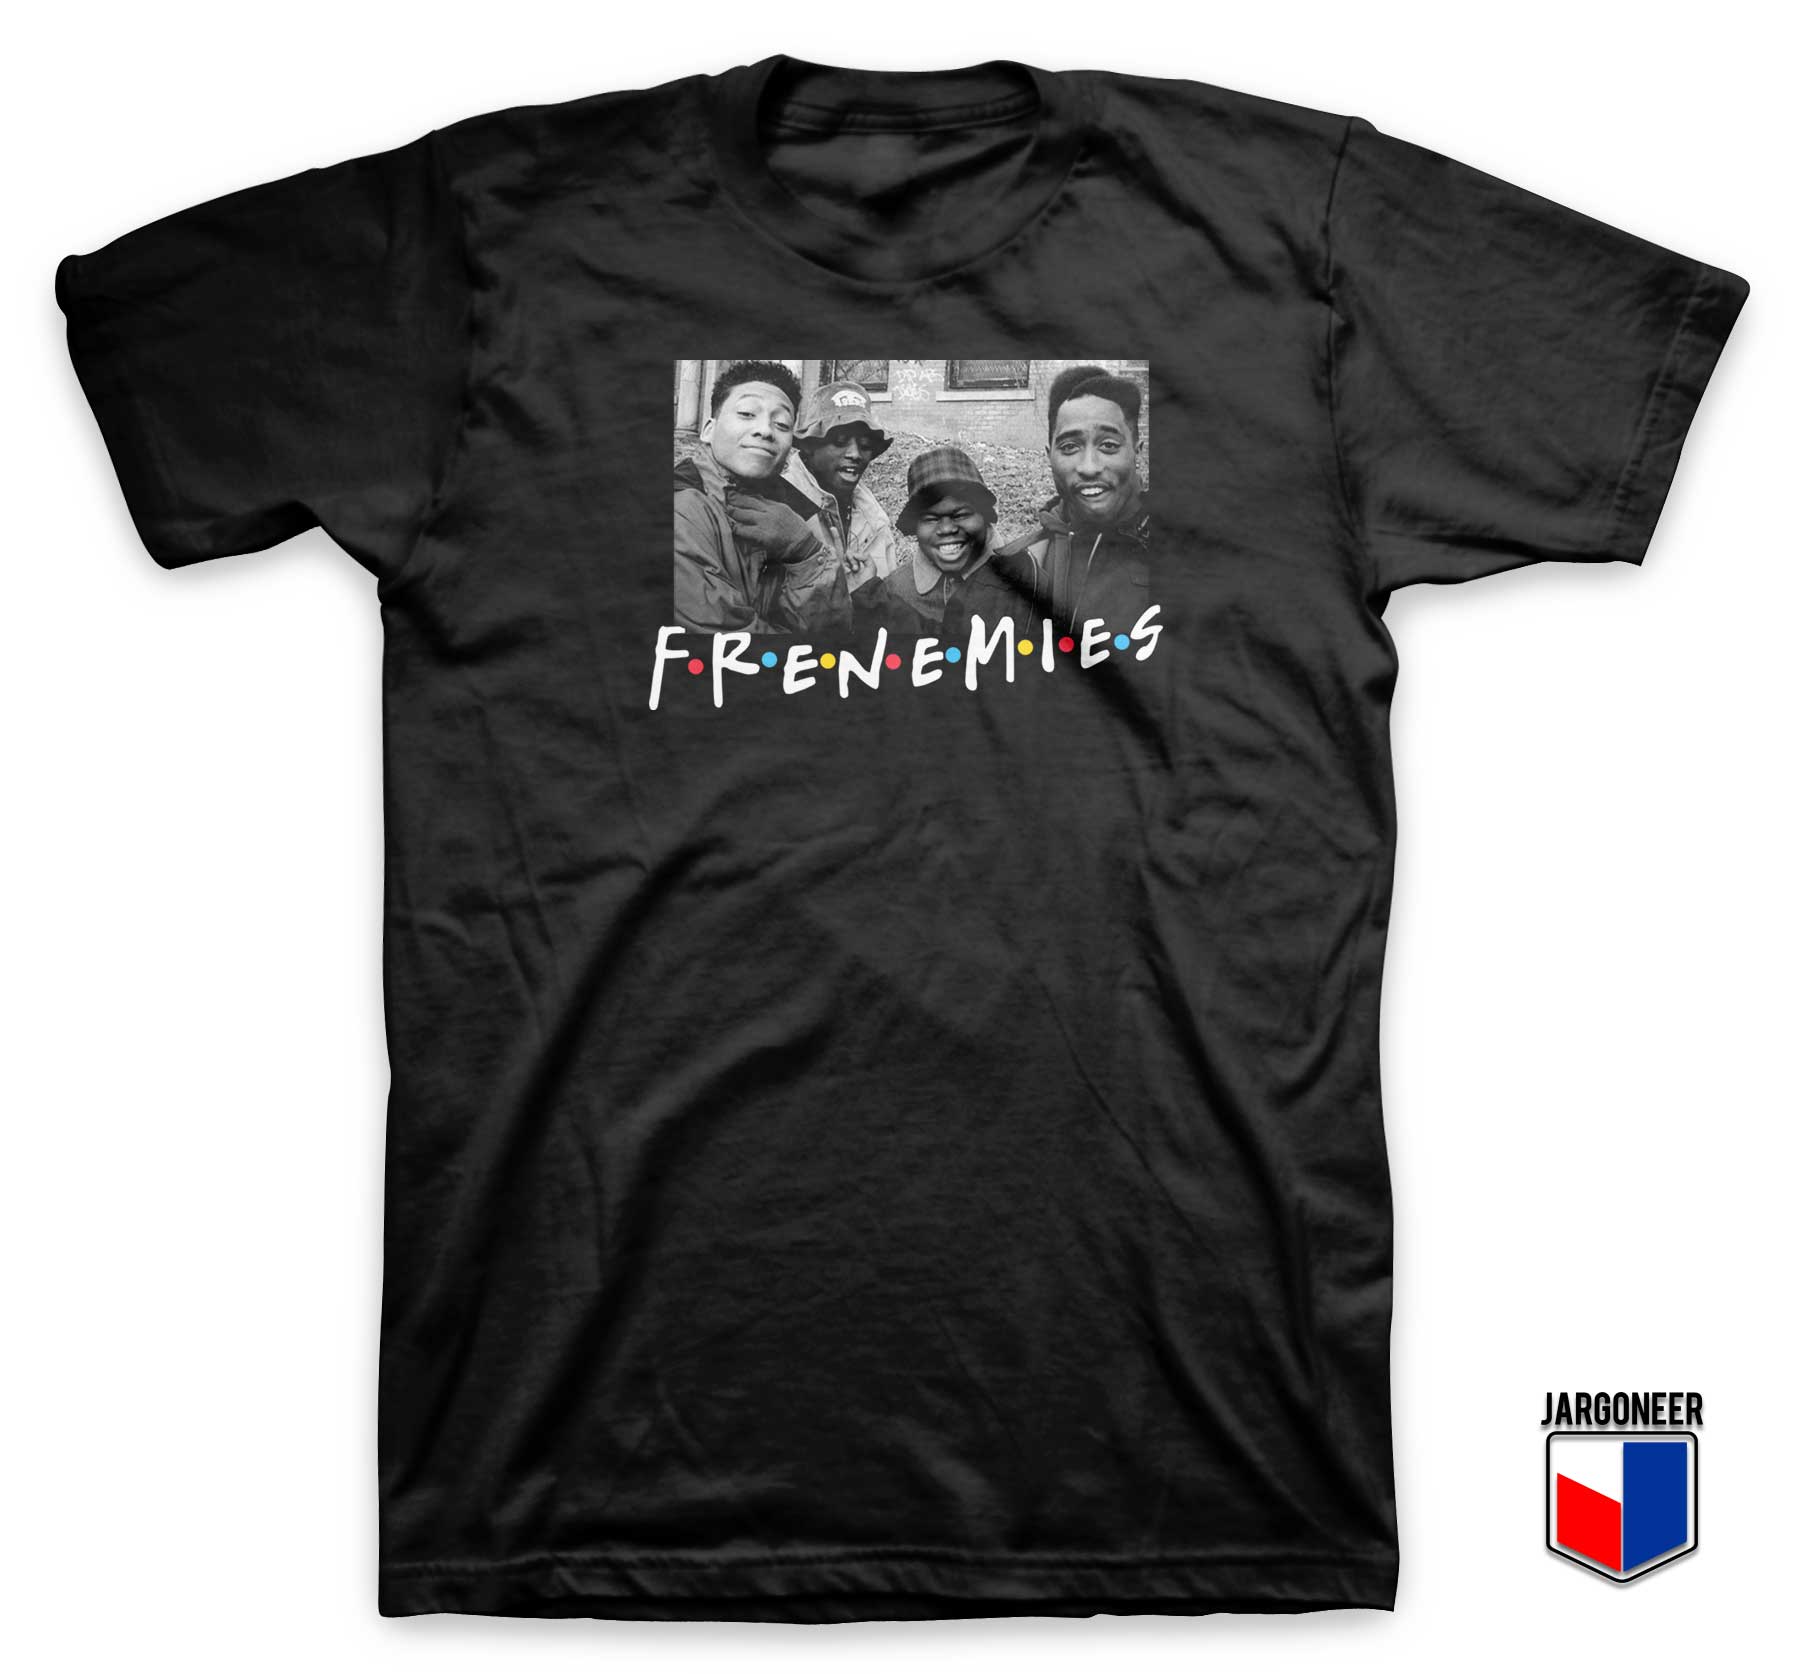 Frenemies Comedy Drama T Shirt - Shop Unique Graphic Cool Shirt Designs